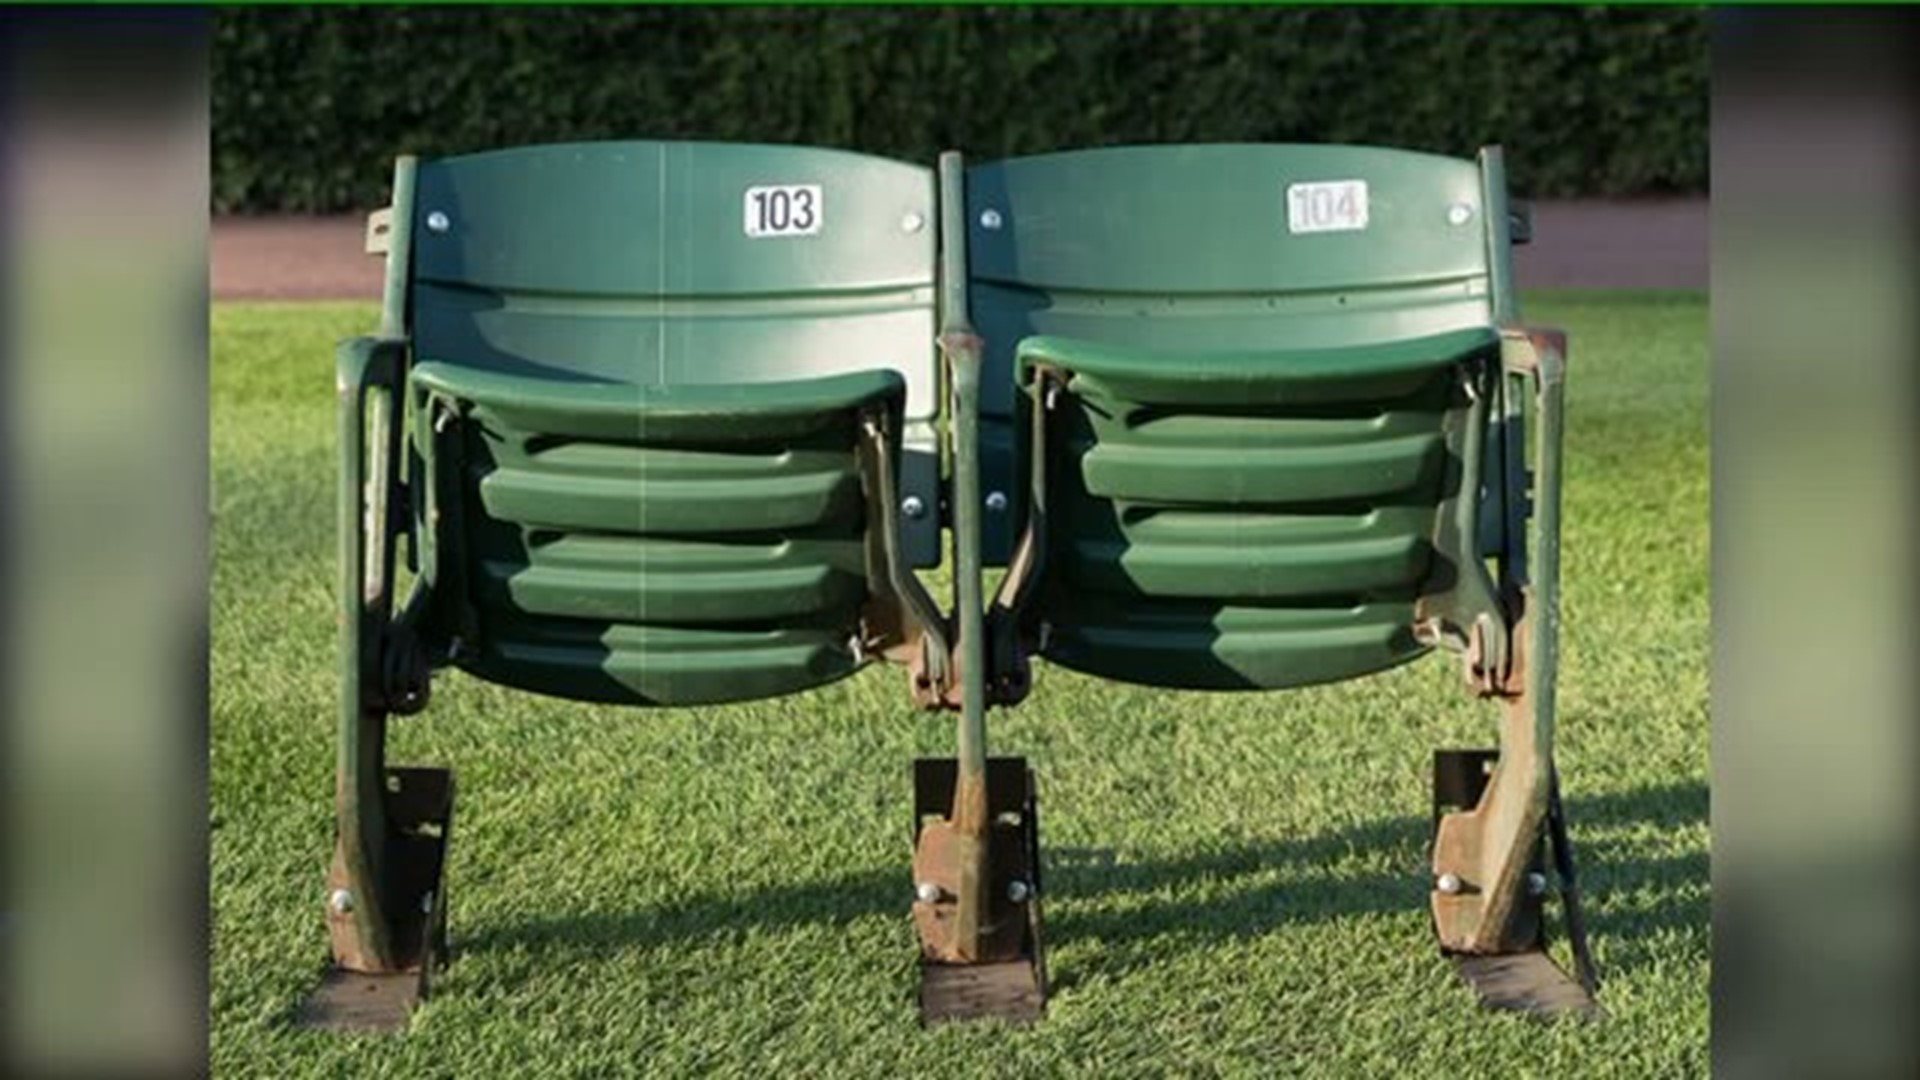 Wrigley Field seats go on sale